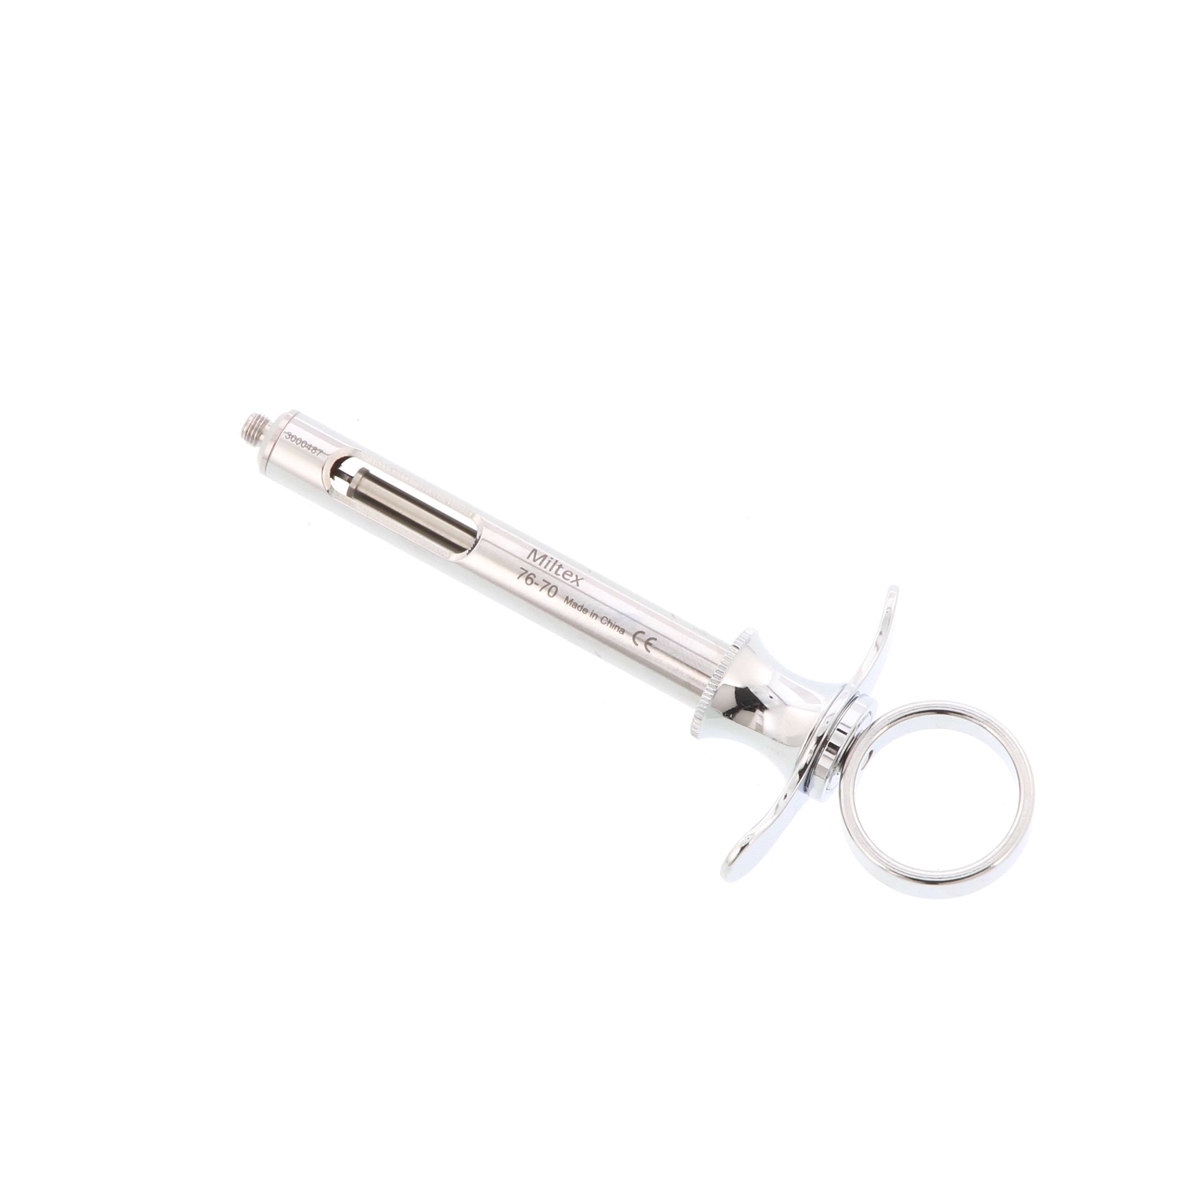 Aspirating Syringes CW Type, Standard, 1.8 cc, 76-70